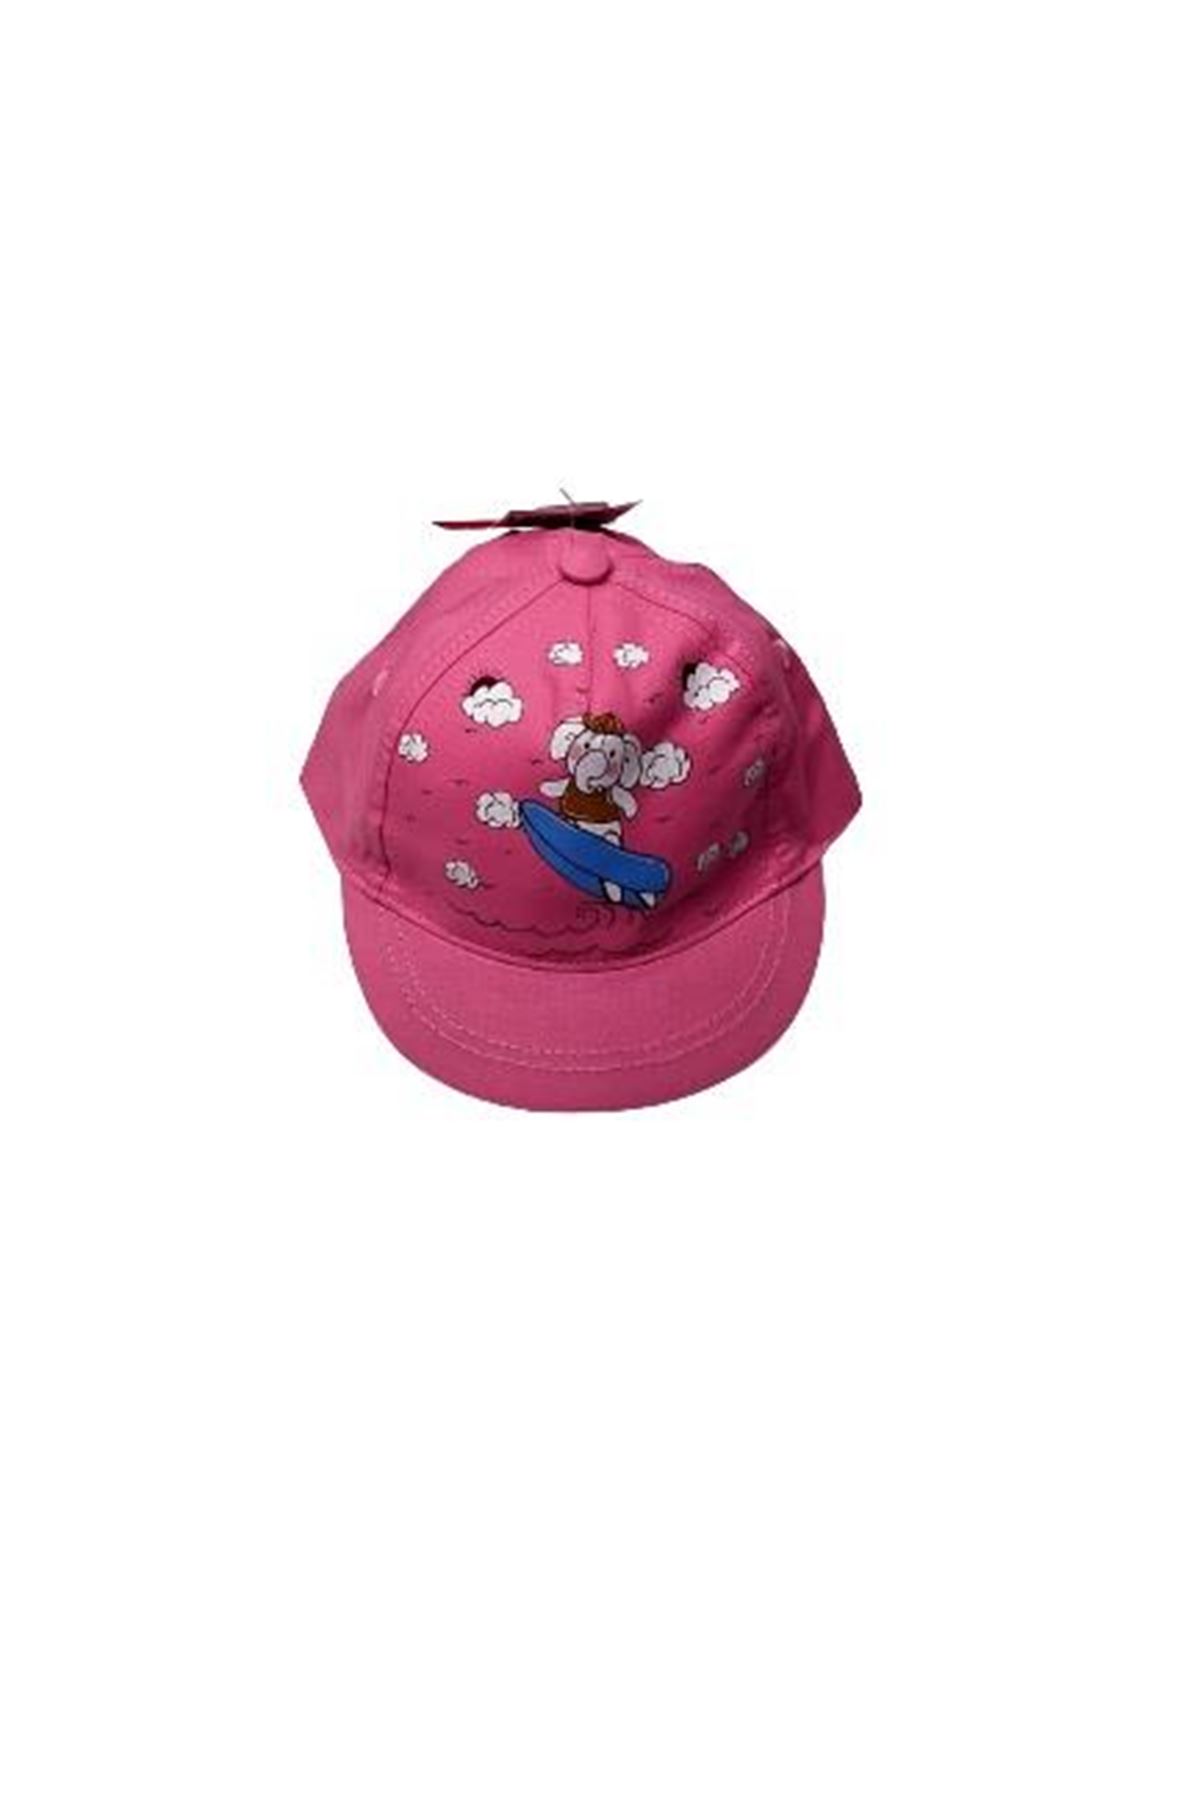 Kitti Aylık Kız Şapka (0-18 Ay) 800009 Koyu Pembe